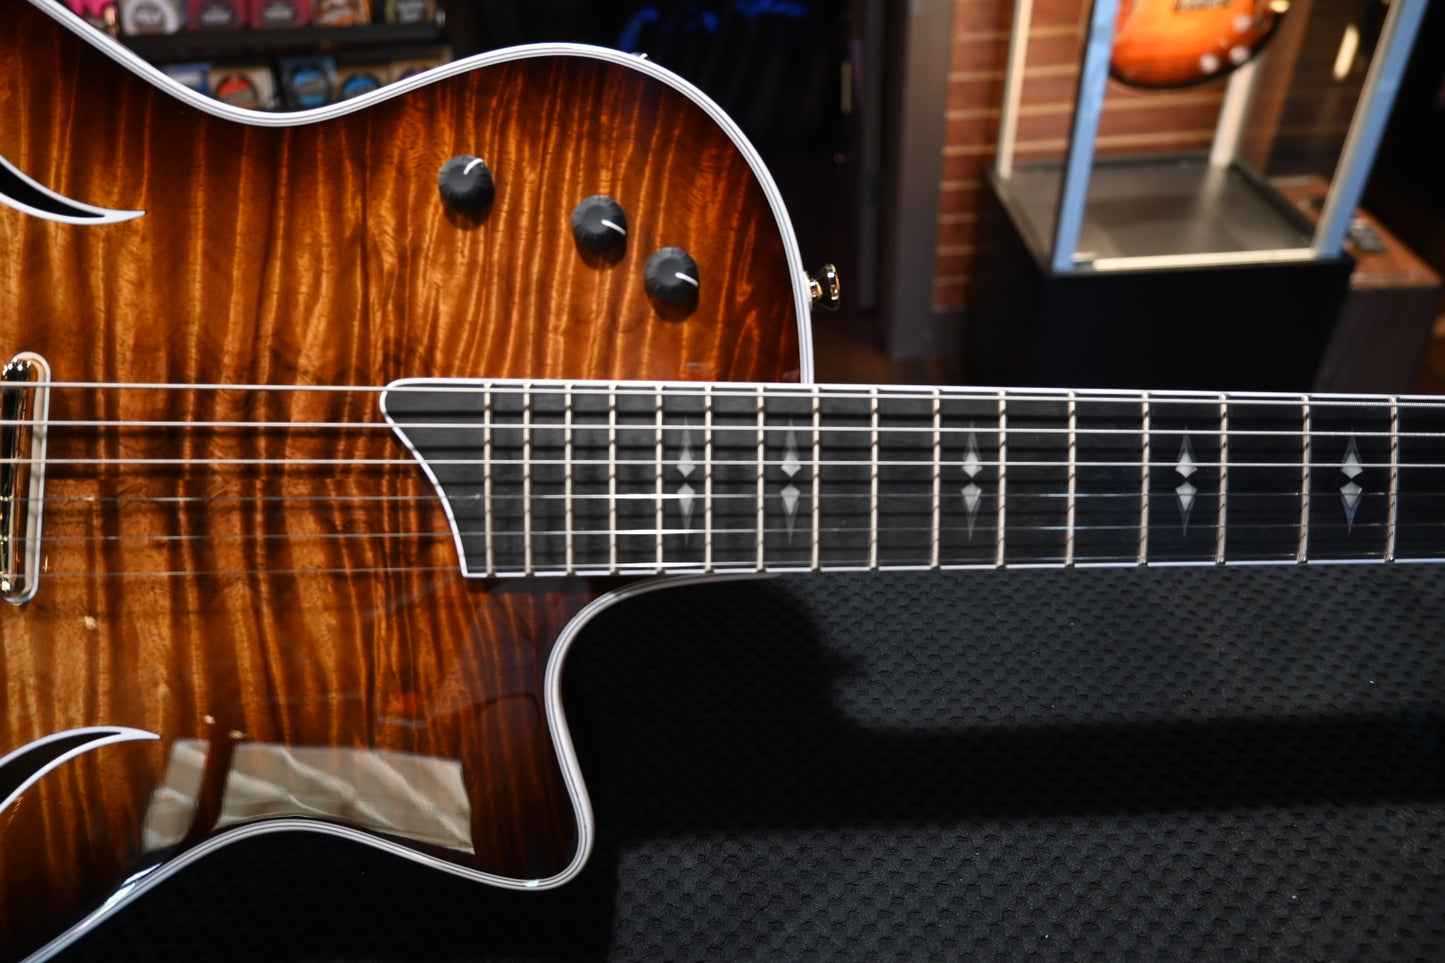 Taylor T5z Custom Koa AA Koa Upgrade #3001 Guitar w/ Taylor buy one get a GS Mini for $199 Promo! - Danville Music